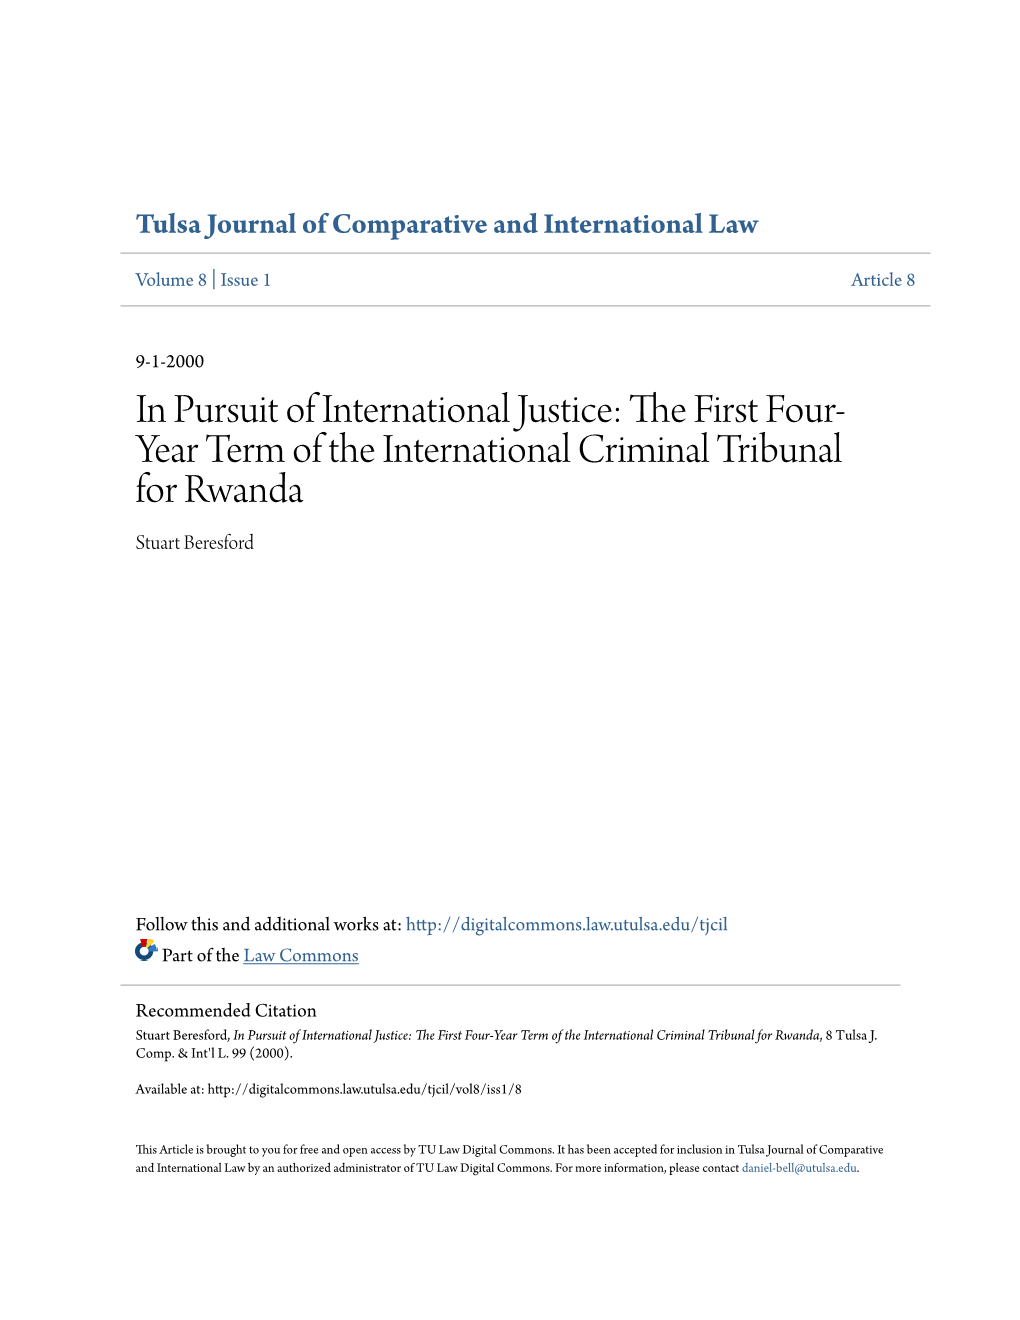 The First Four-Year Term of the International Criminal Tribunal for Rwanda, 8 Tulsa J